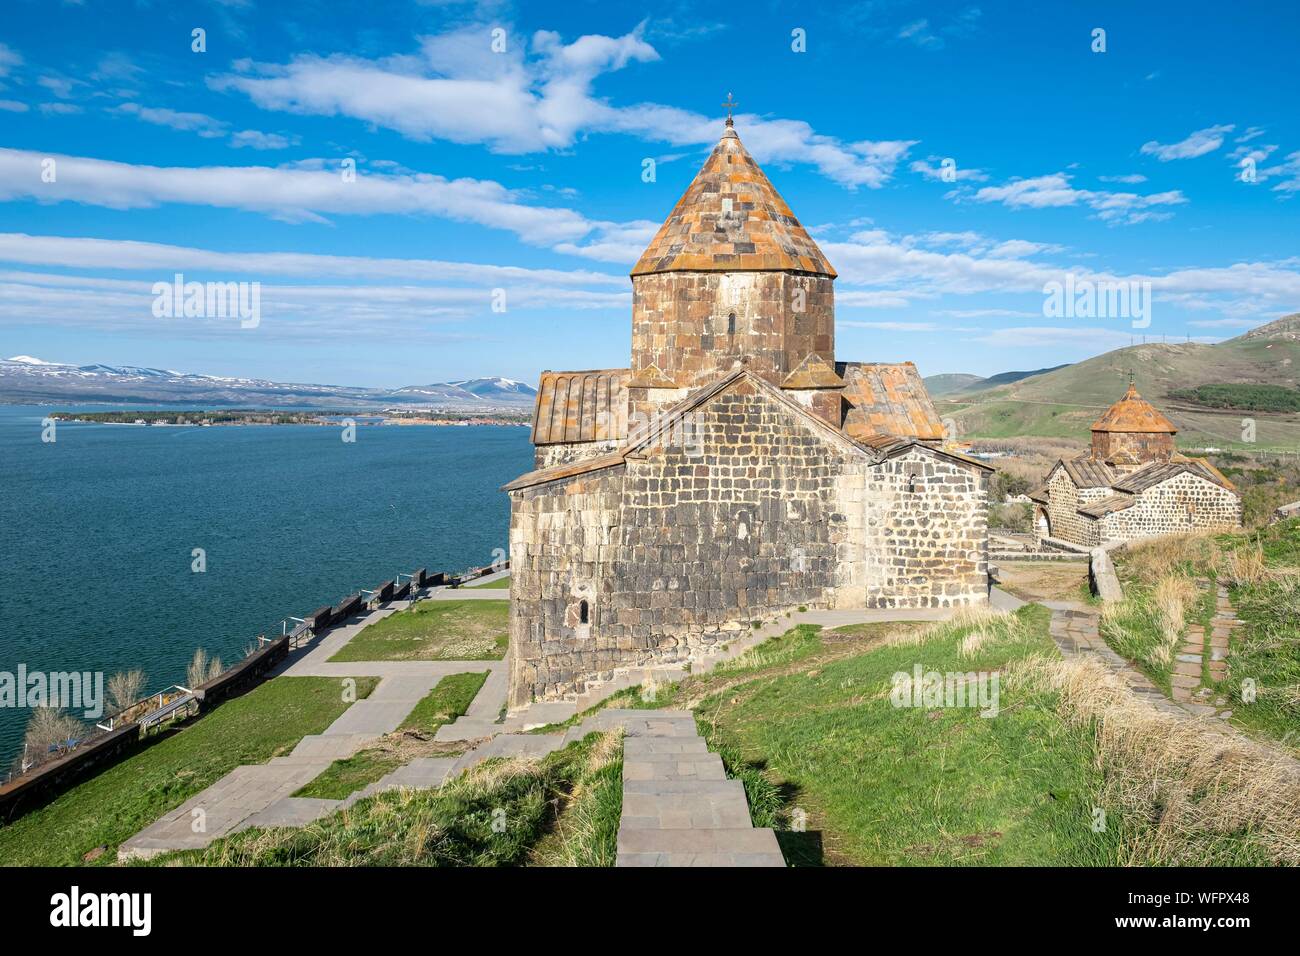 Armenia, Gegharkunik región, Sevan, Sevanavank monasterio a orillas del lago Sevan Foto de stock